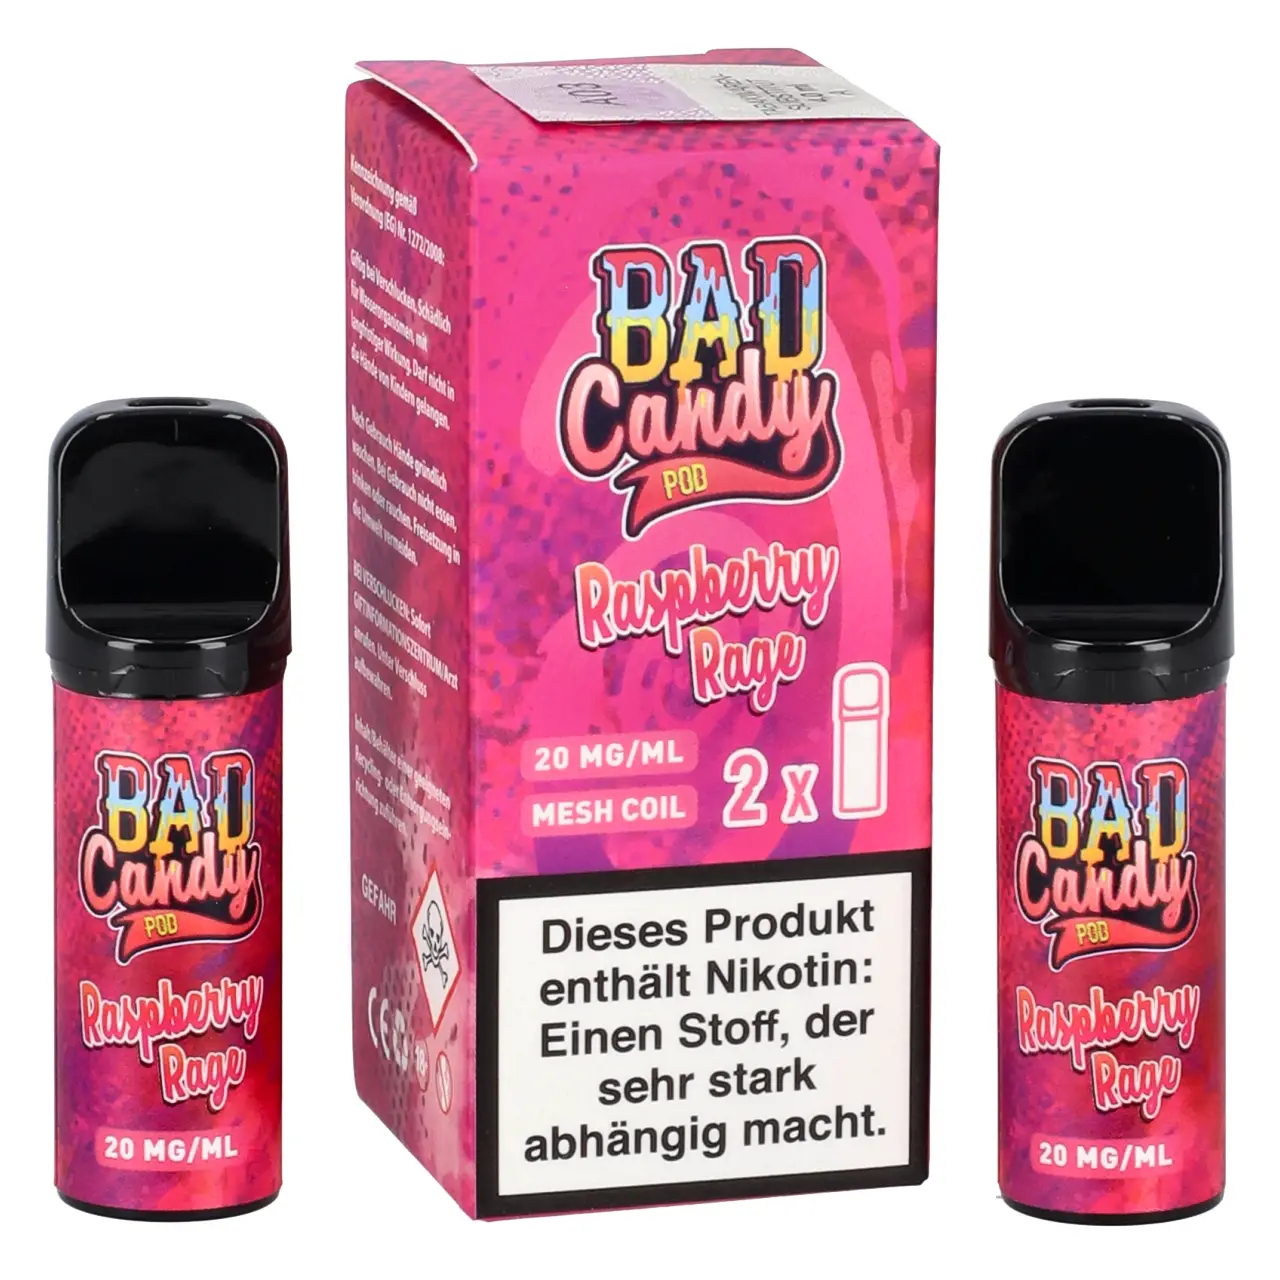 Raspberry Rage - Bad Candy Pod für Mehrweg Vape - befüllt mit 2ml Liquid - ELFA kompatibel - 2er Packung